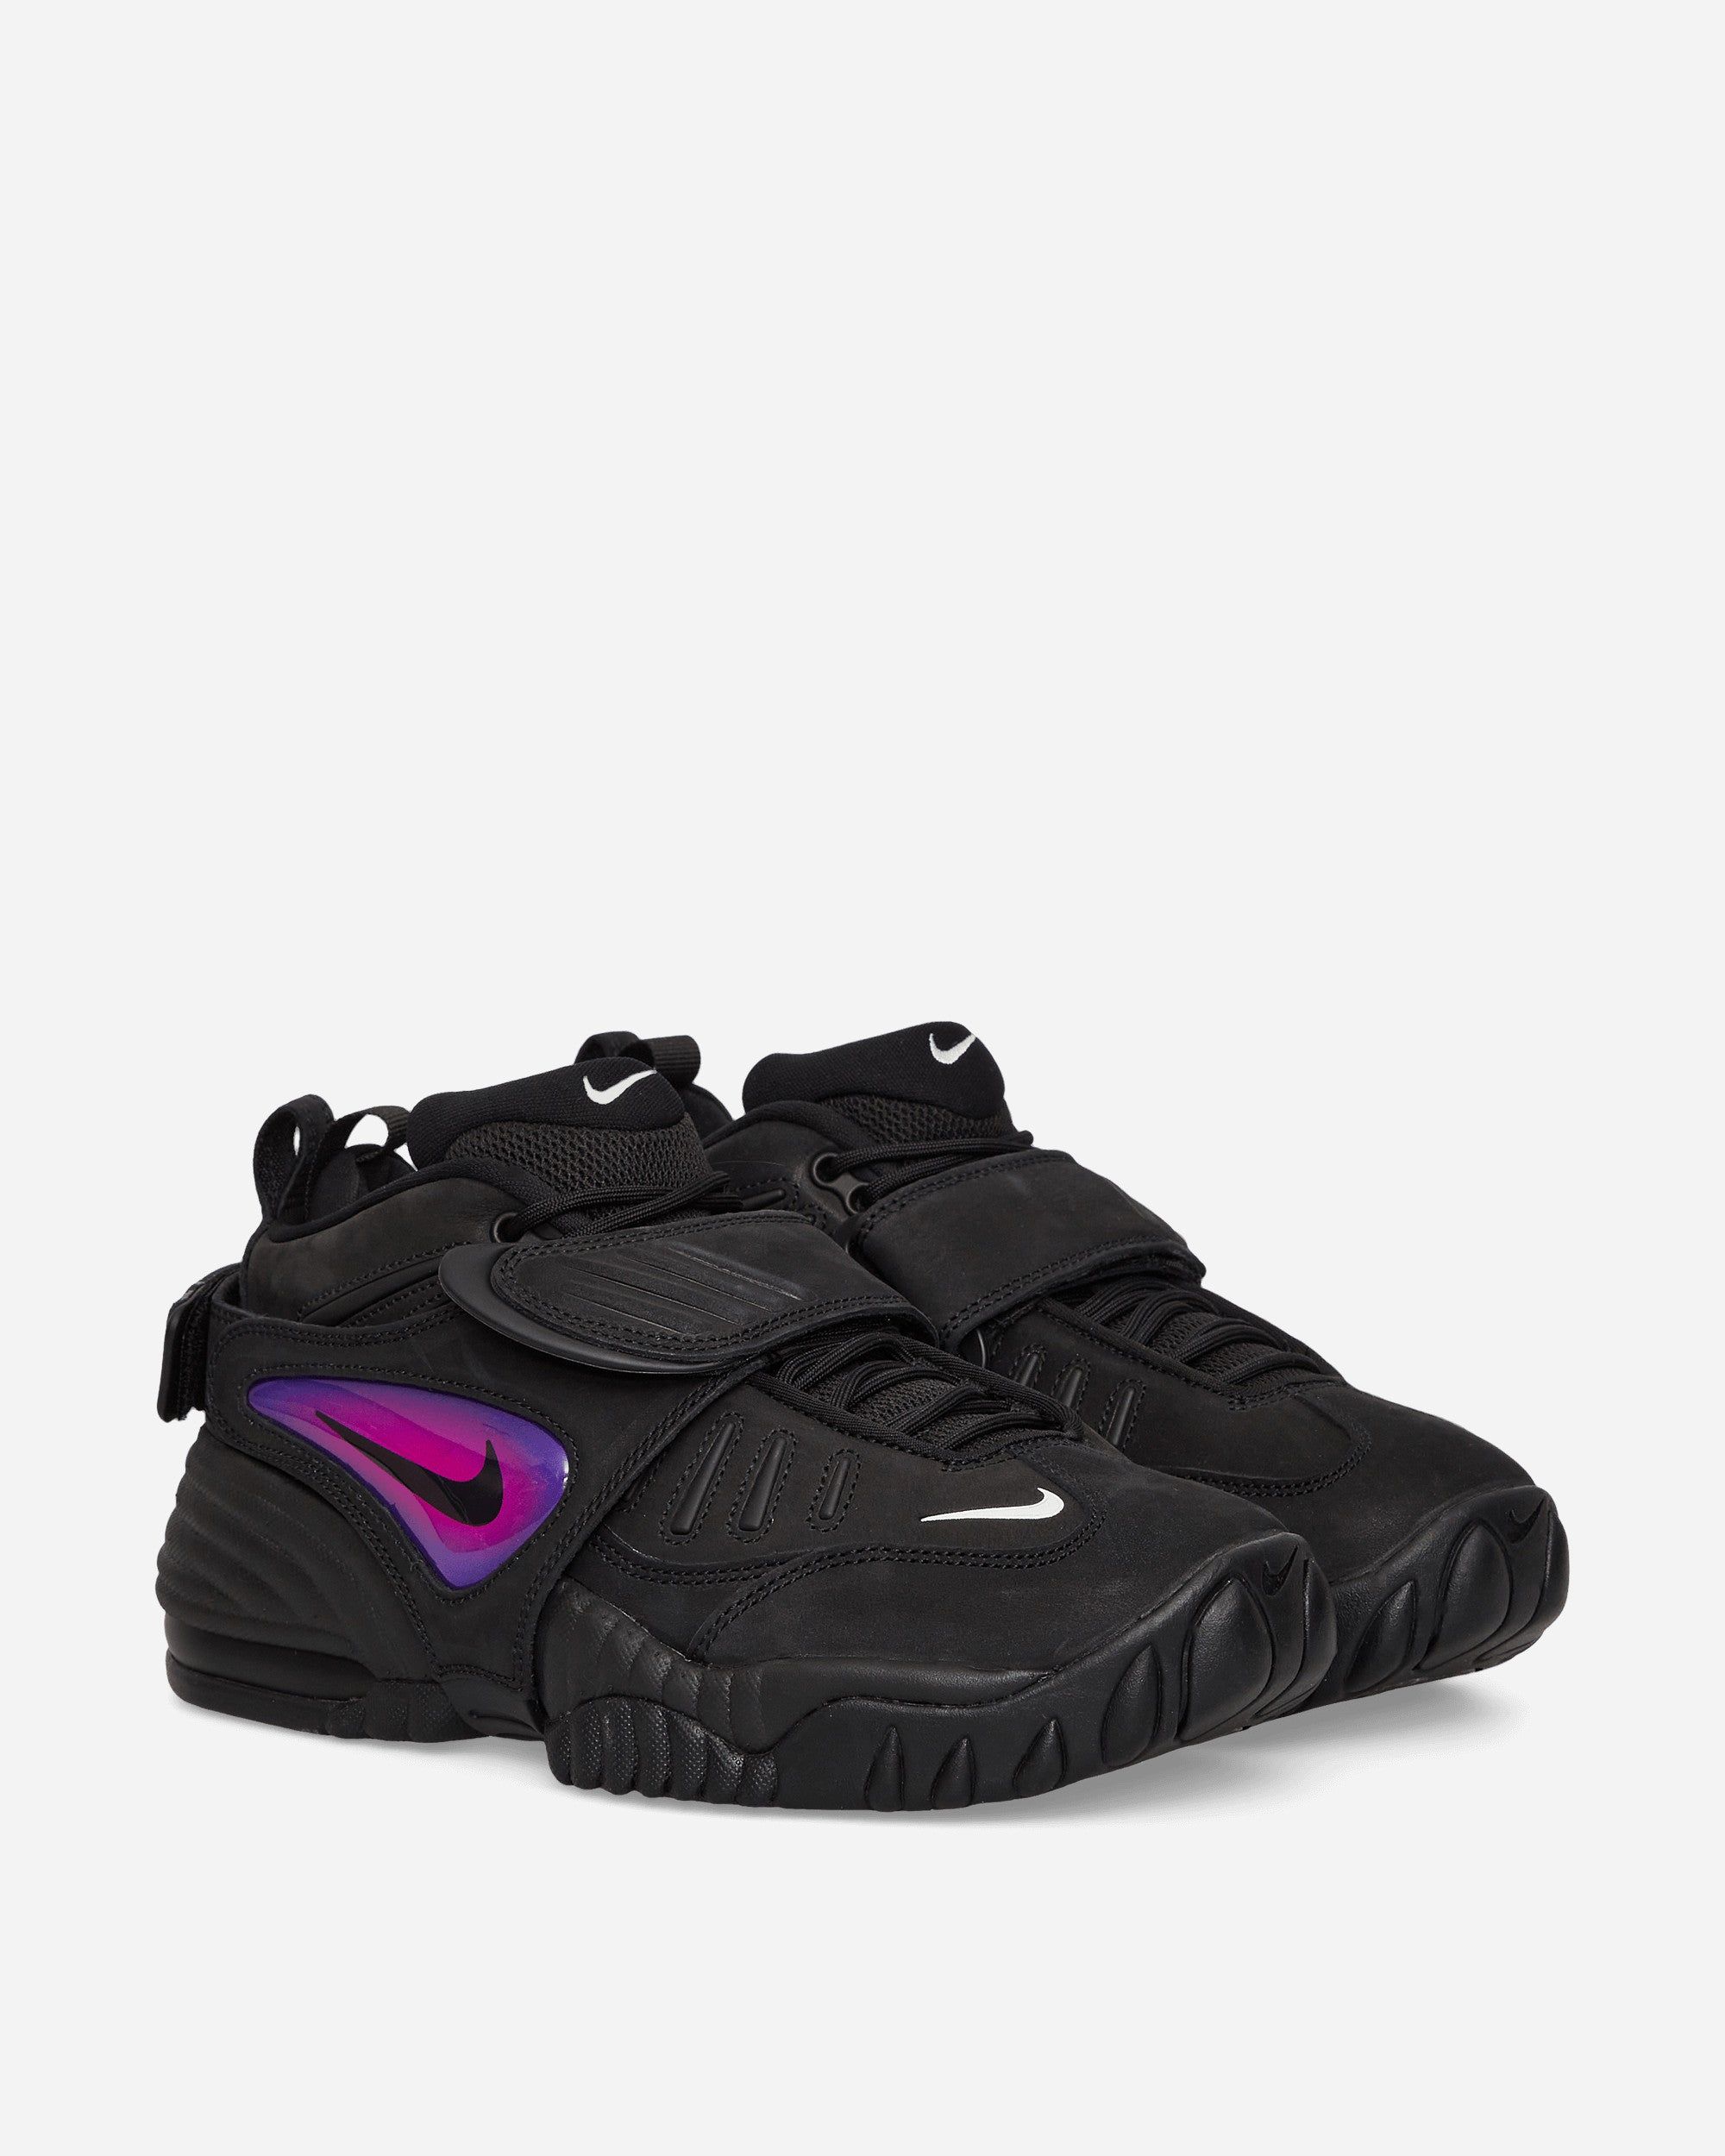 Nike Air Adjust Force Sp Black/White-Psychic Purple Sneakers Low DM8465-001